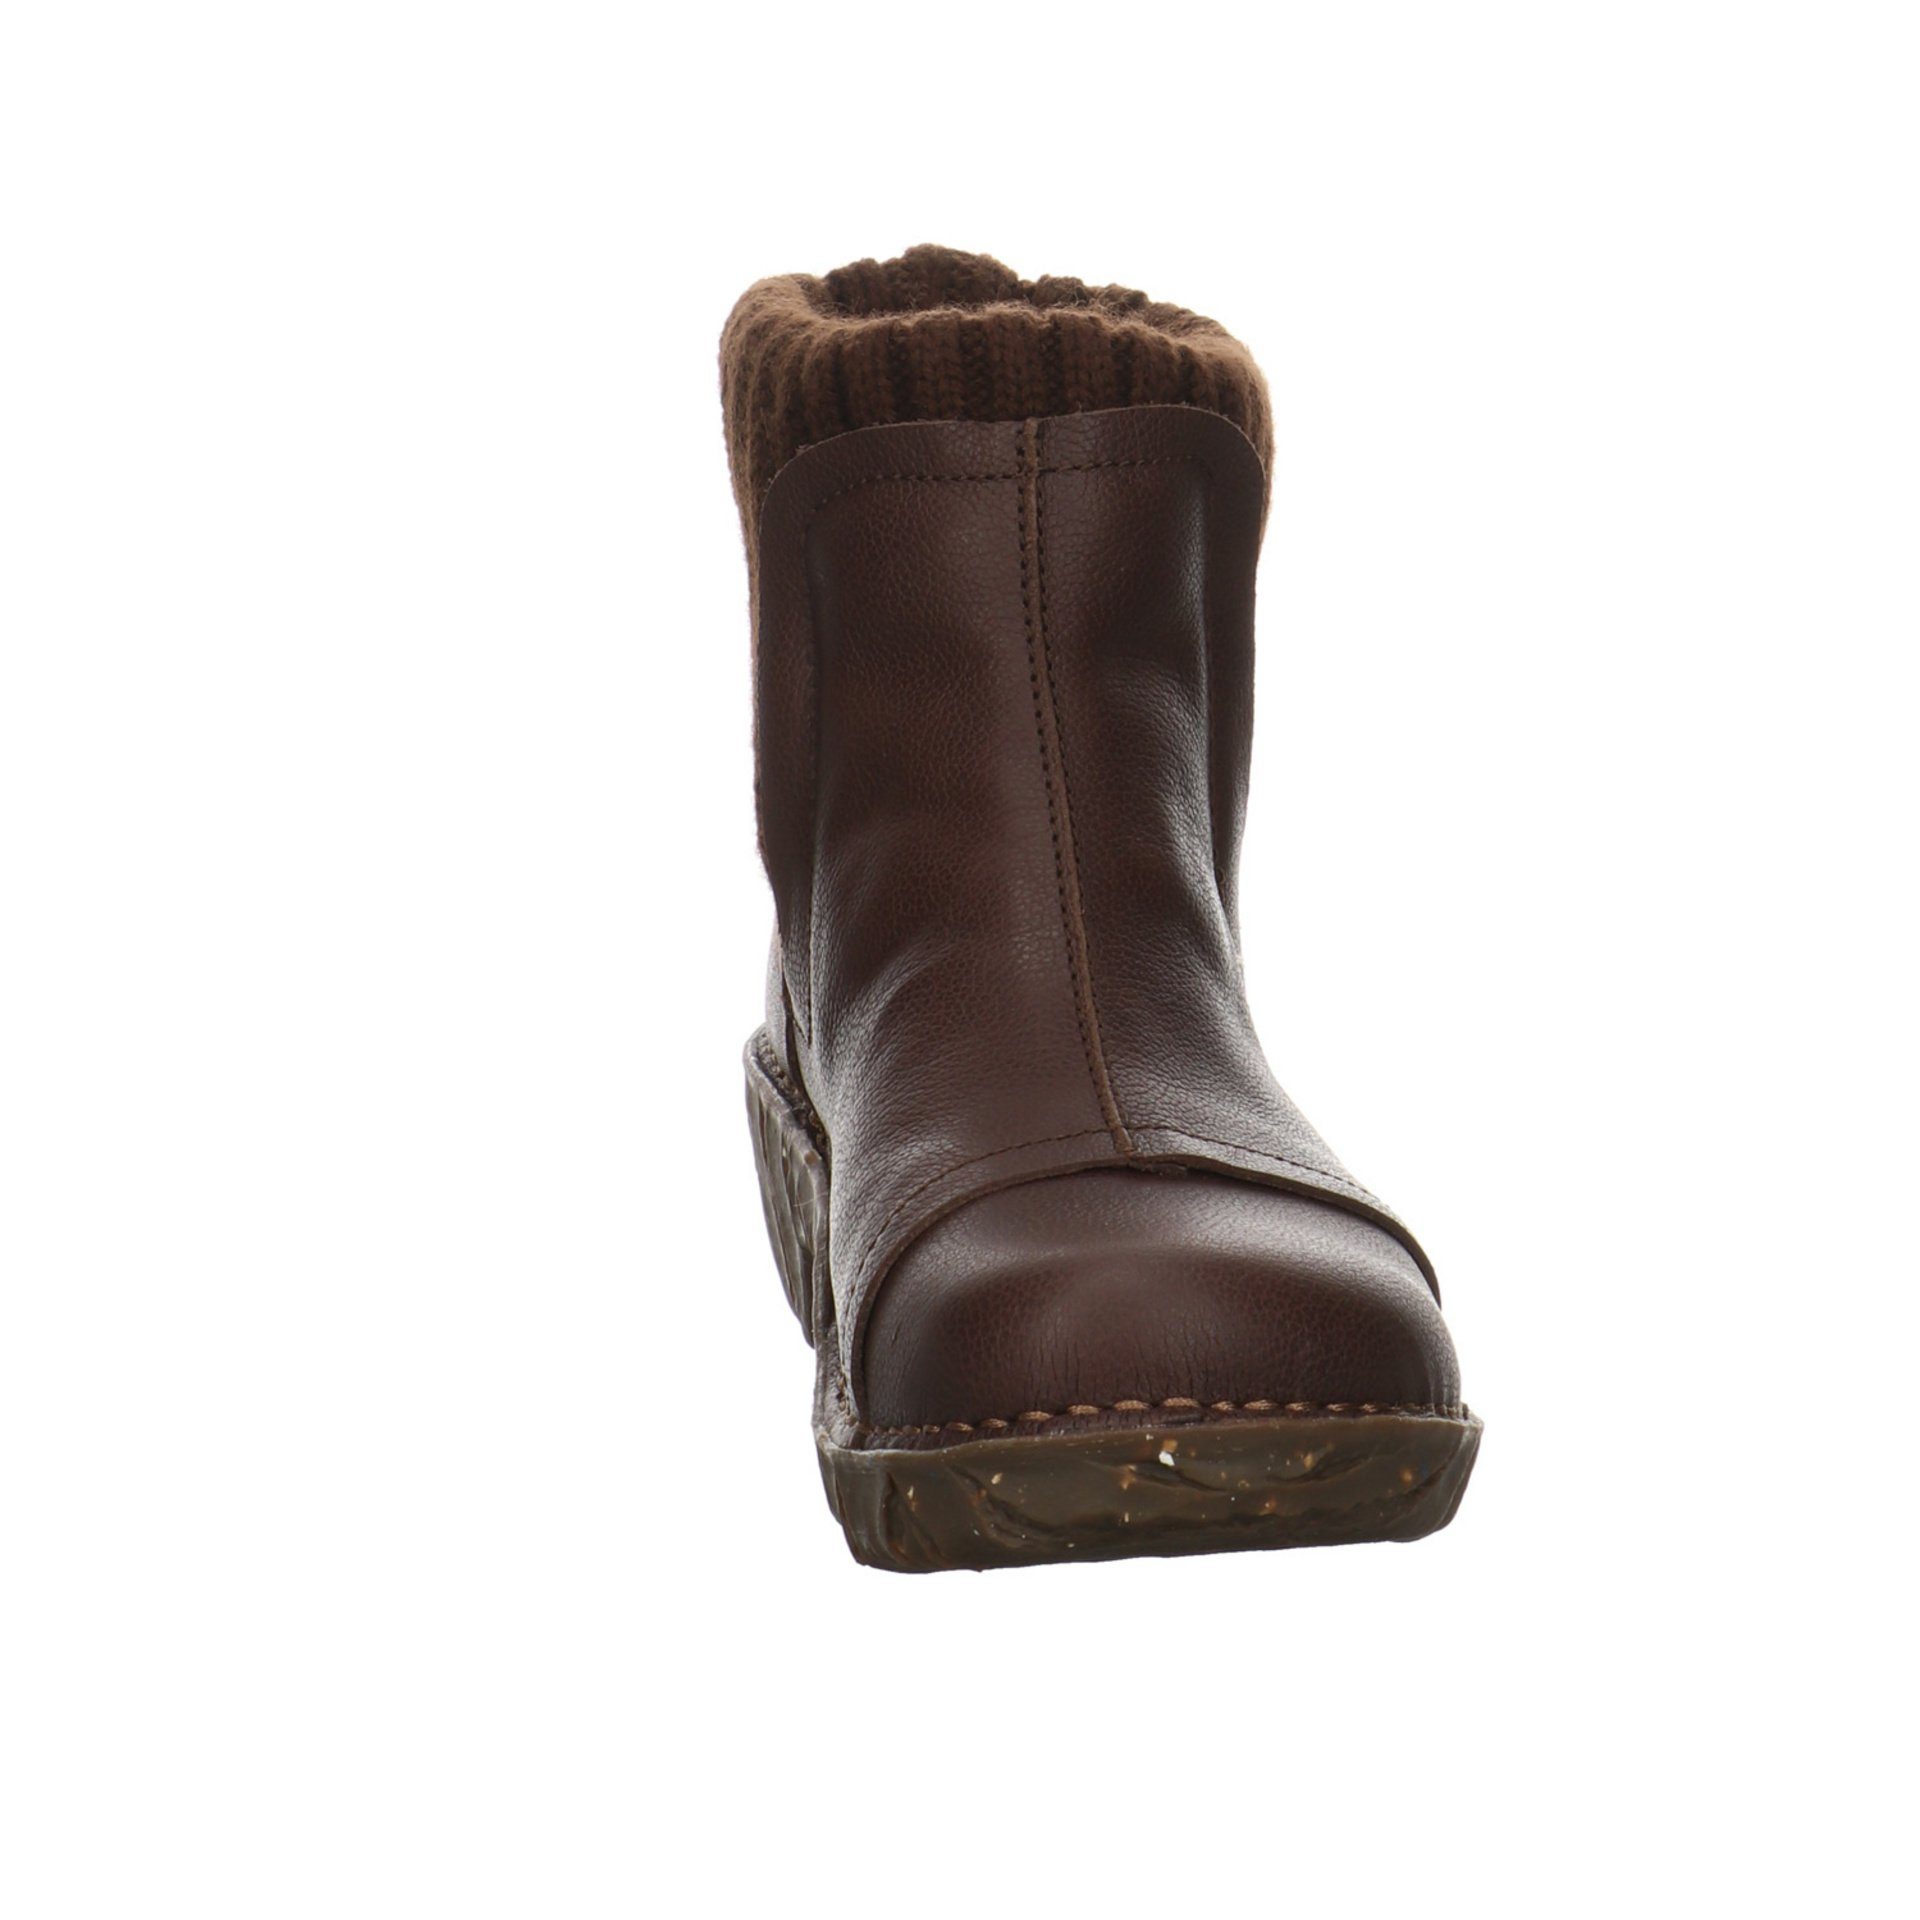 El Naturalista Damen Glattleder Yggdrasil Stiefel Boots brown Stiefel Schuhe